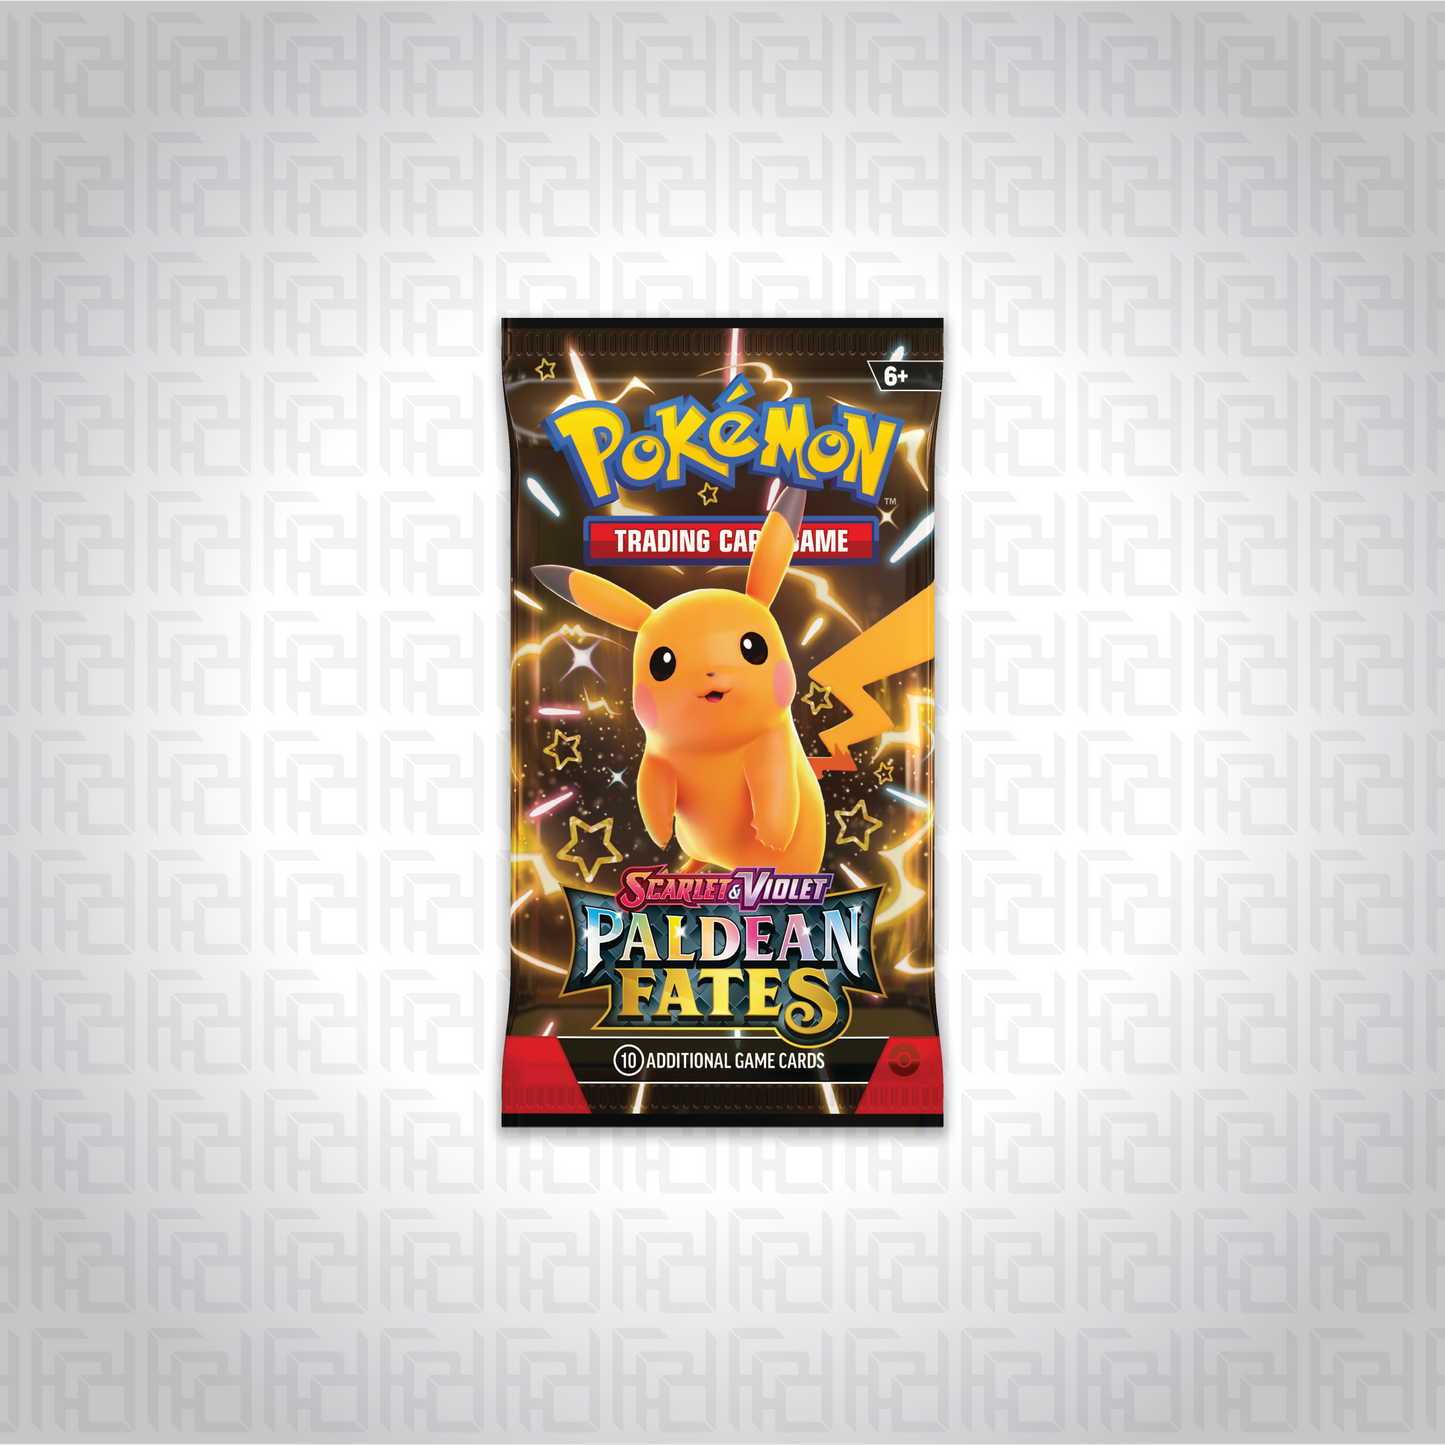 Pokemon Trading Card Game booster pack of Scarlet & Violet—Paldean Fates expansion.